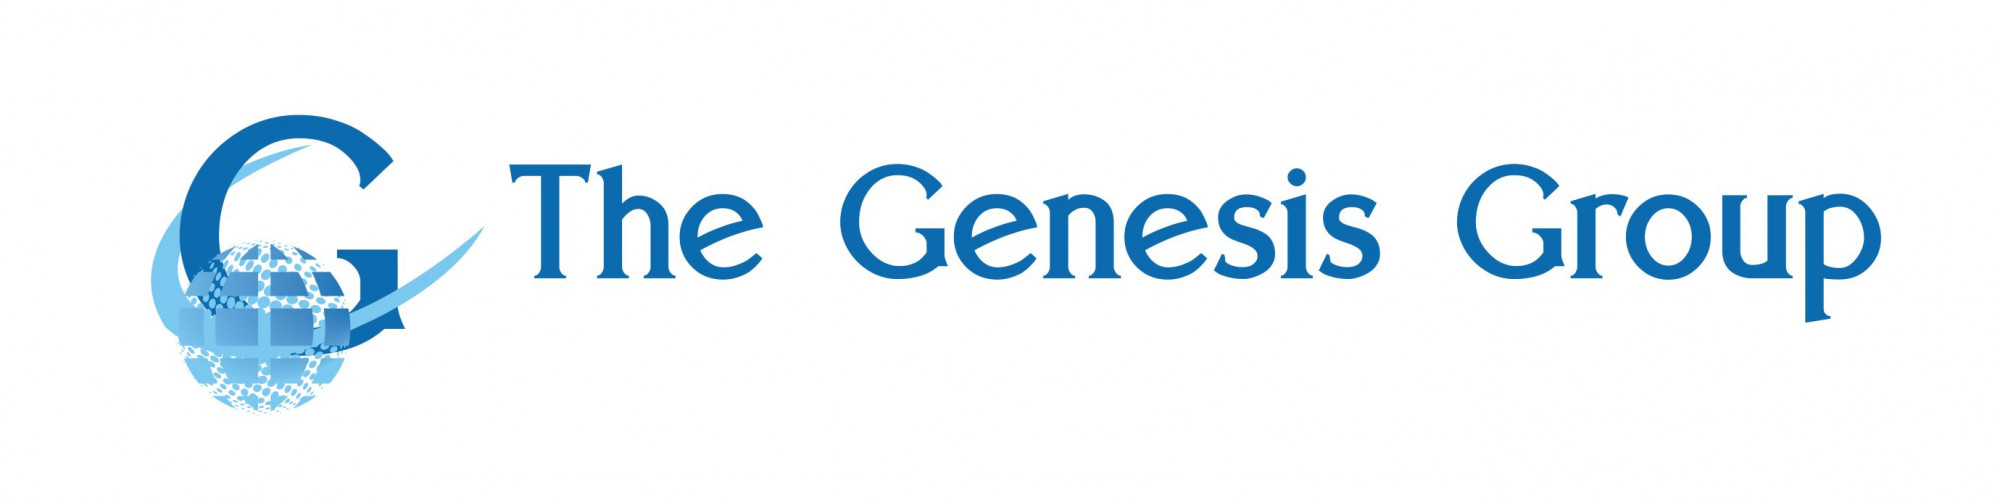 The Genesis Group Inc